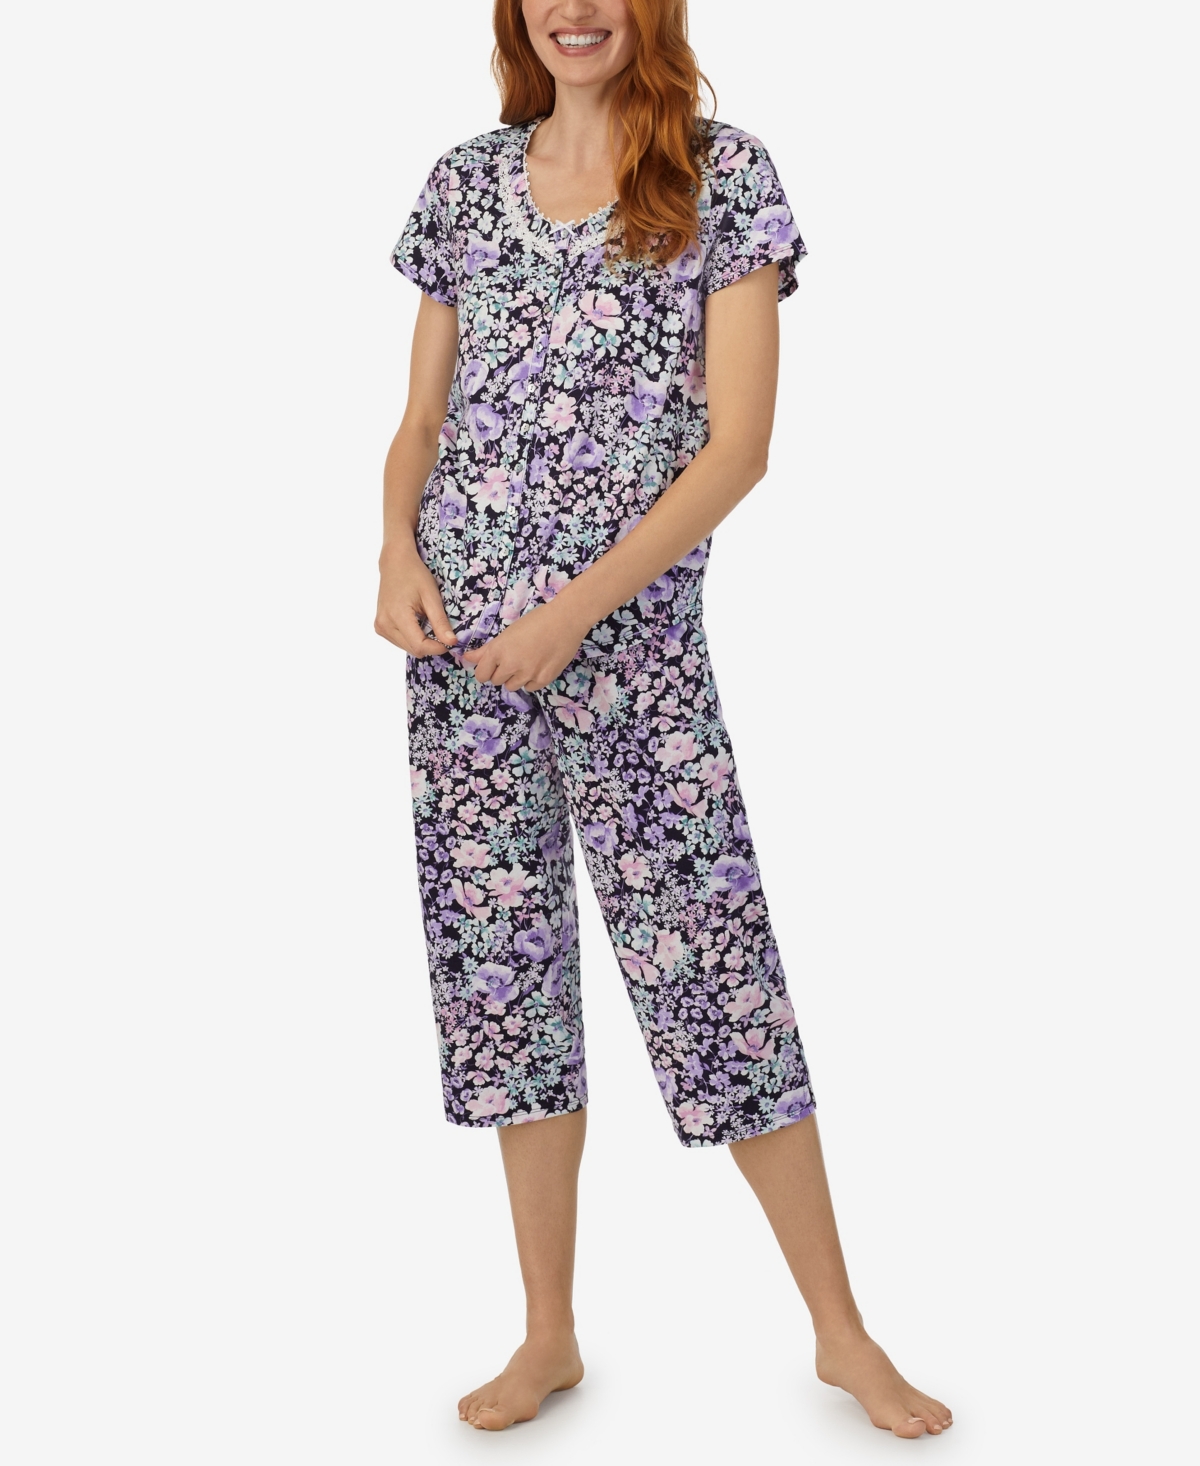 Aria Women's Short Sleeve Top Capri Pants 2-pc. Pajama Set In Navy Floral Print